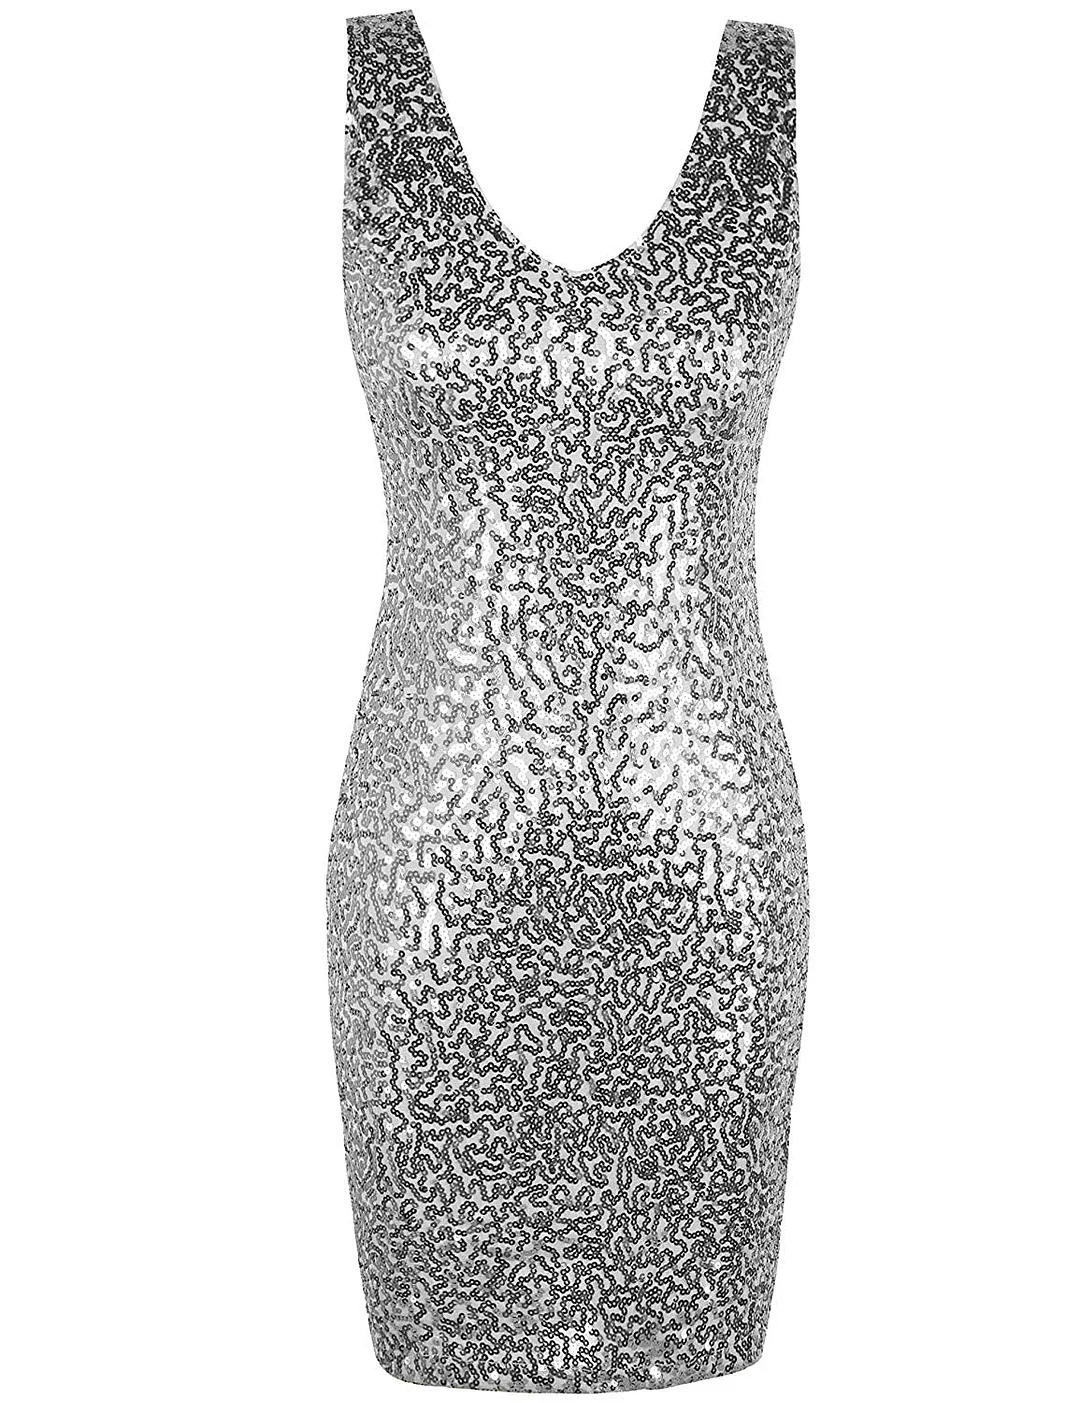 Women's Sequin Cocktail Dress V Neck Bodycon Glitter Party Dress